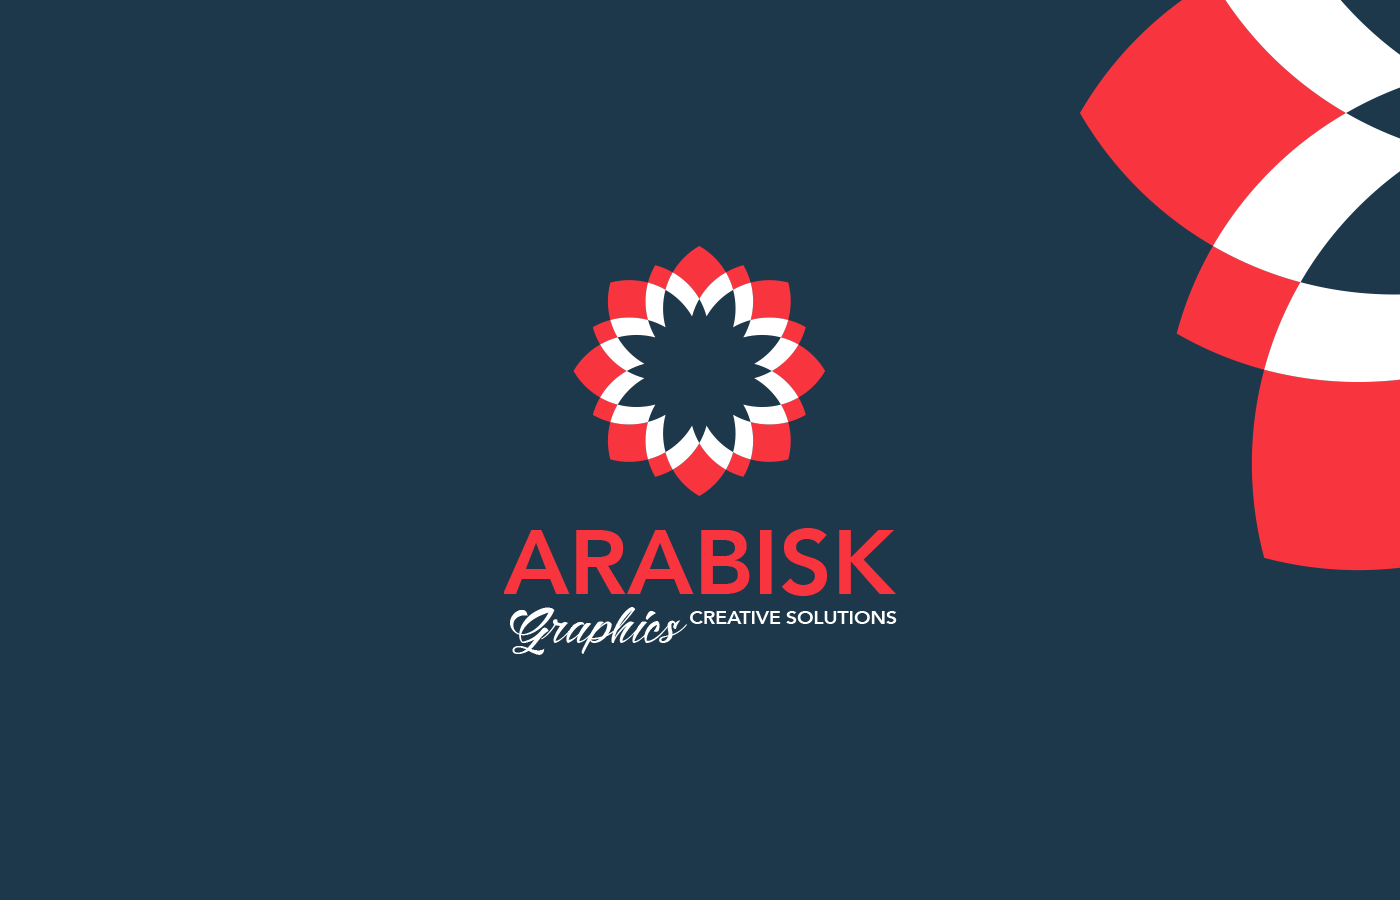 Arabisk Graphics Brand